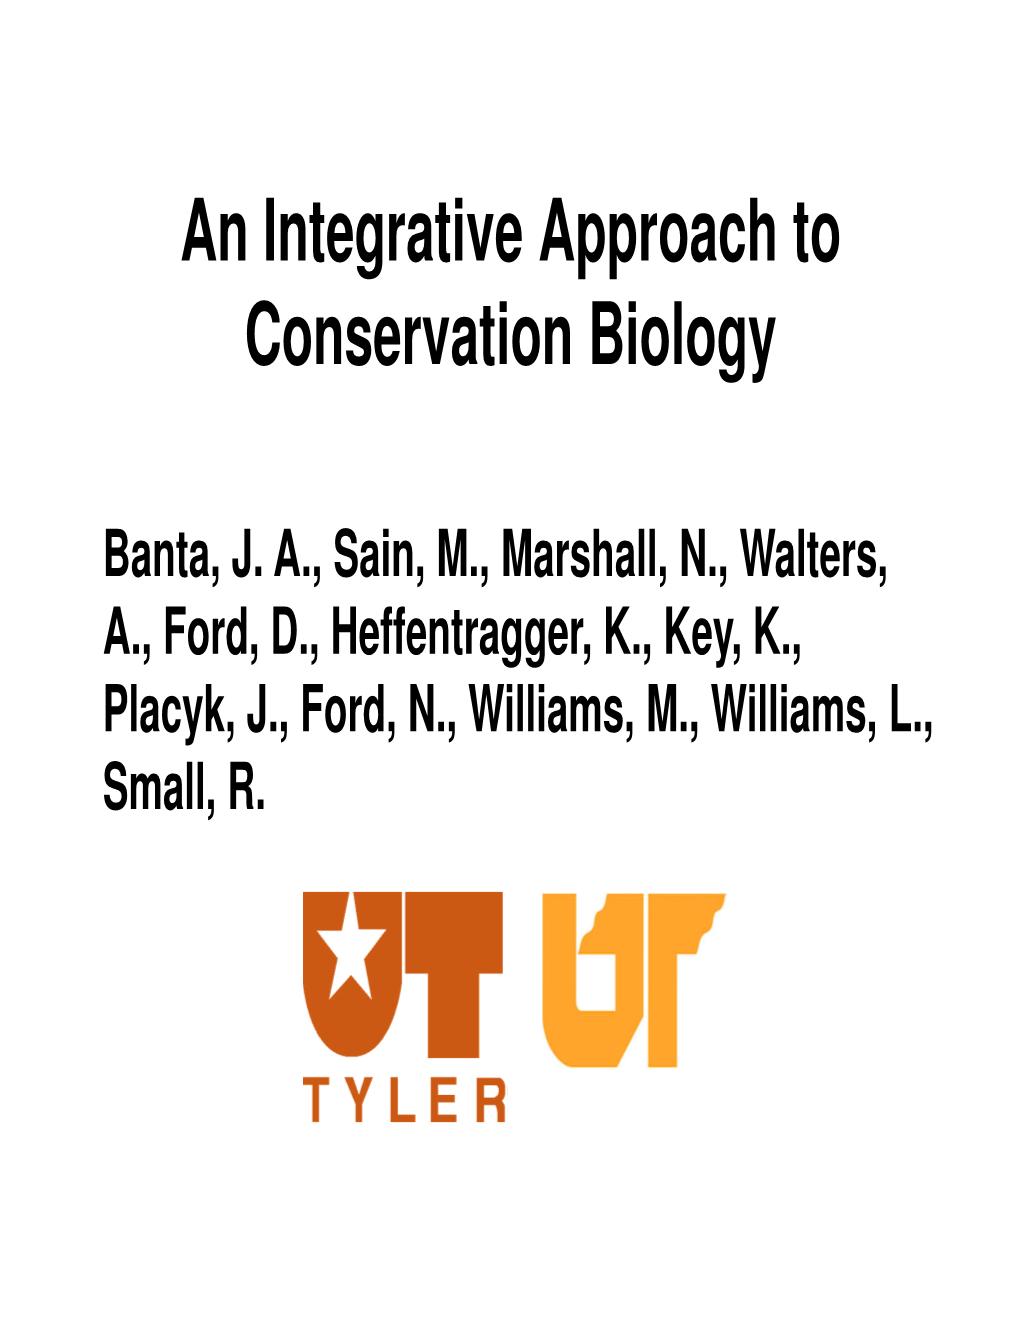 An Integrative Approach to Conservation Biology